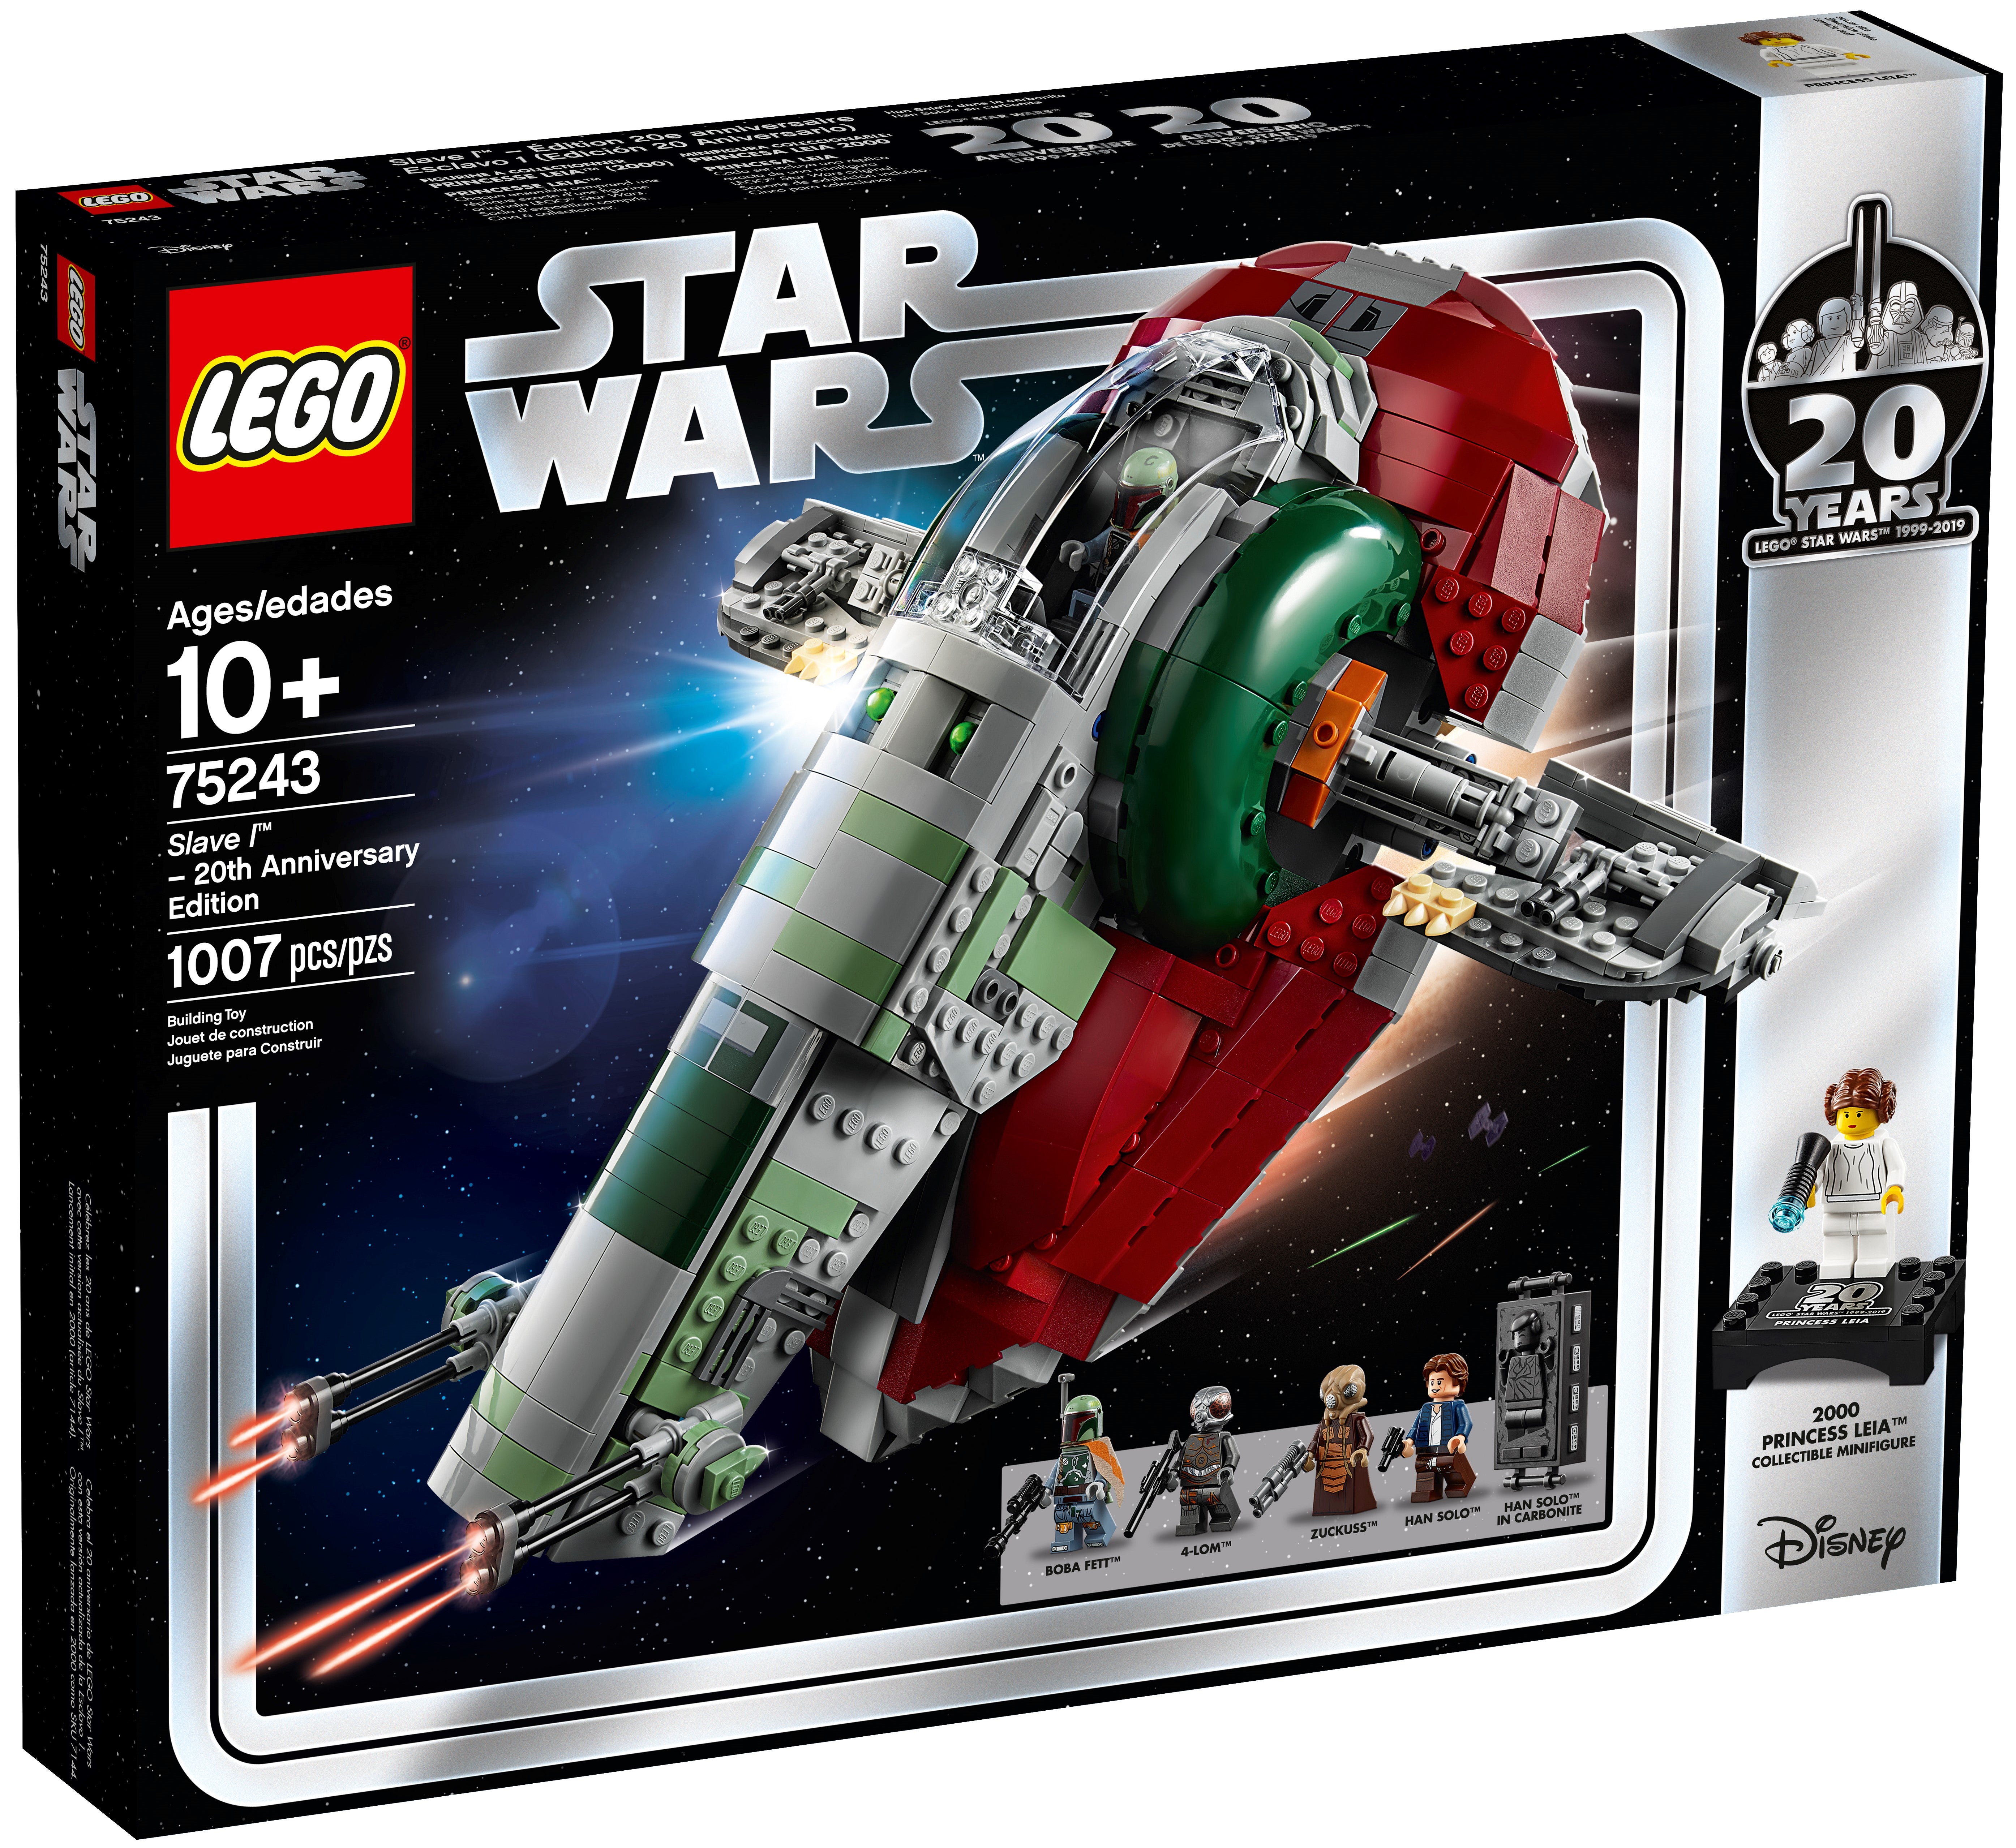 * New /& Sealed box * 20th Anniversary Edition Lego 75243 Star Wars Slave L